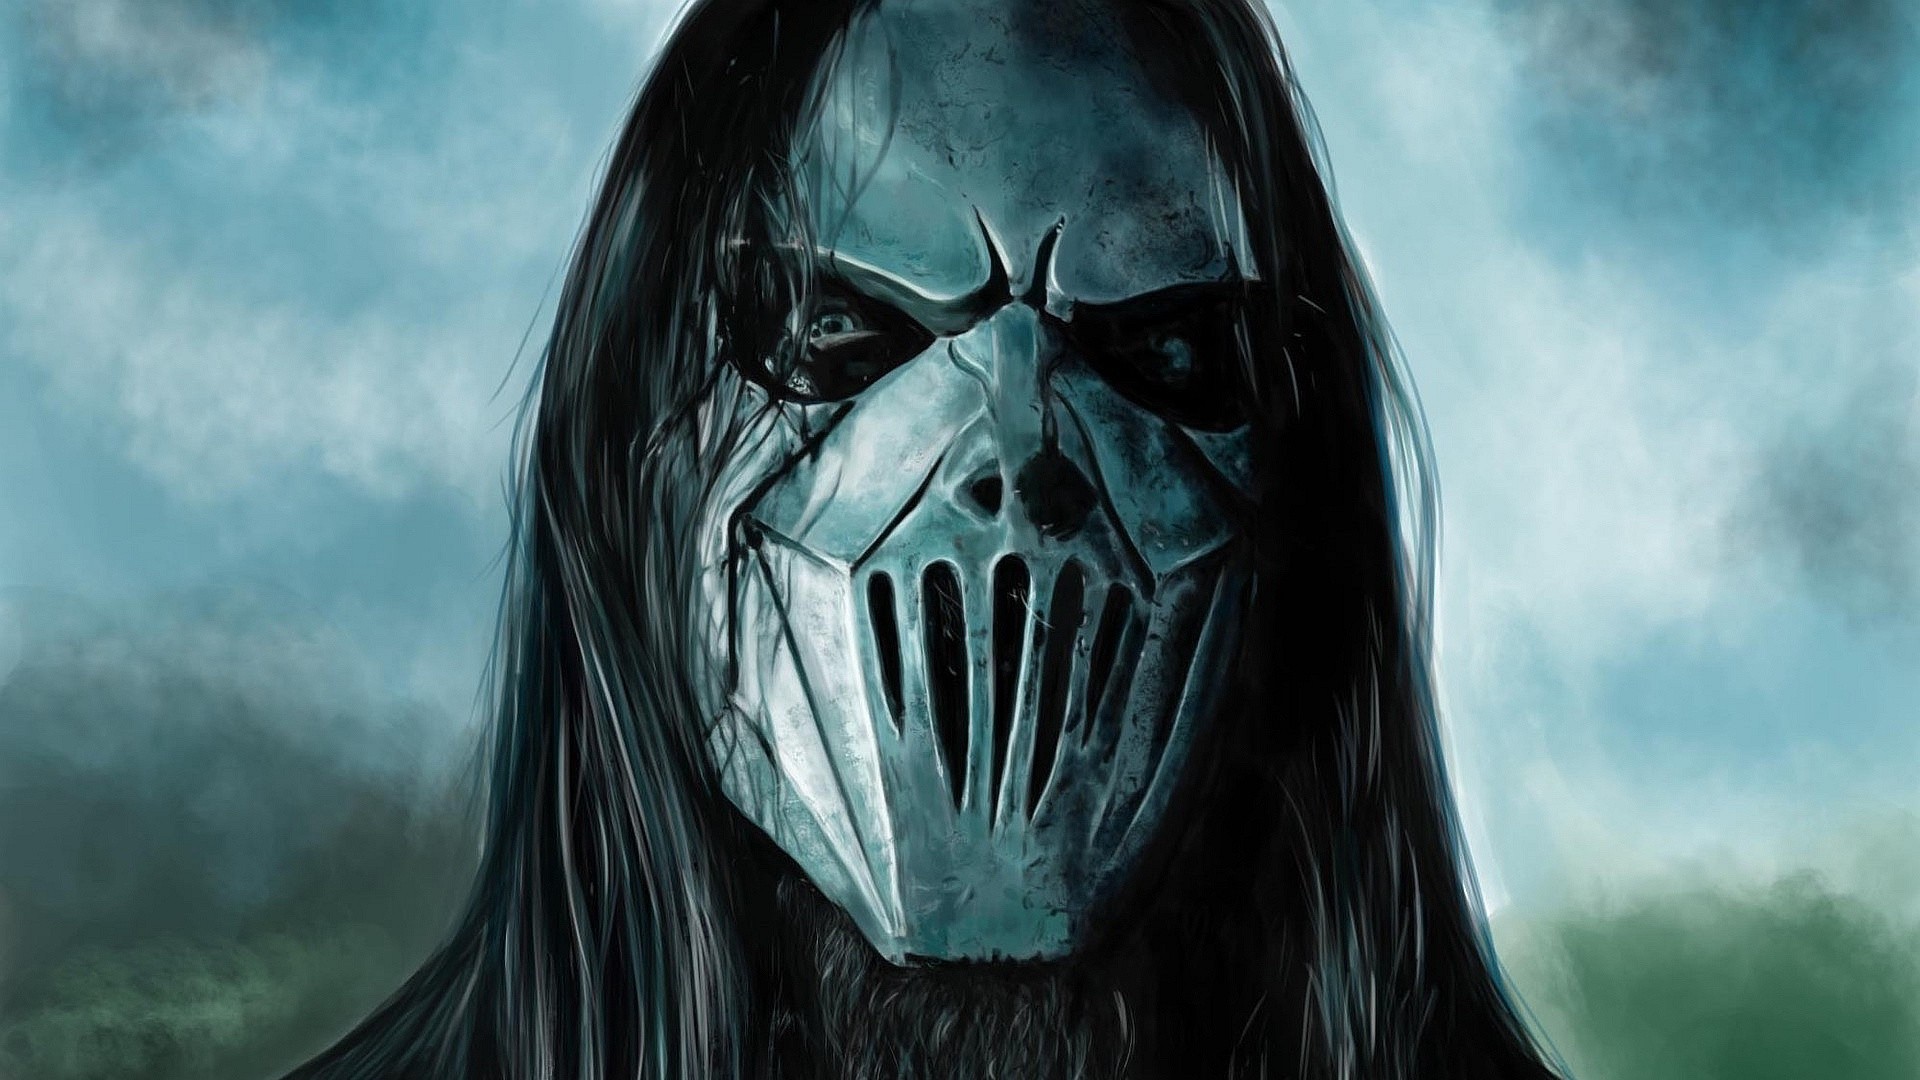 Mask Artwork Slipknot Music Mick Thomson Metal Music 1920x1080